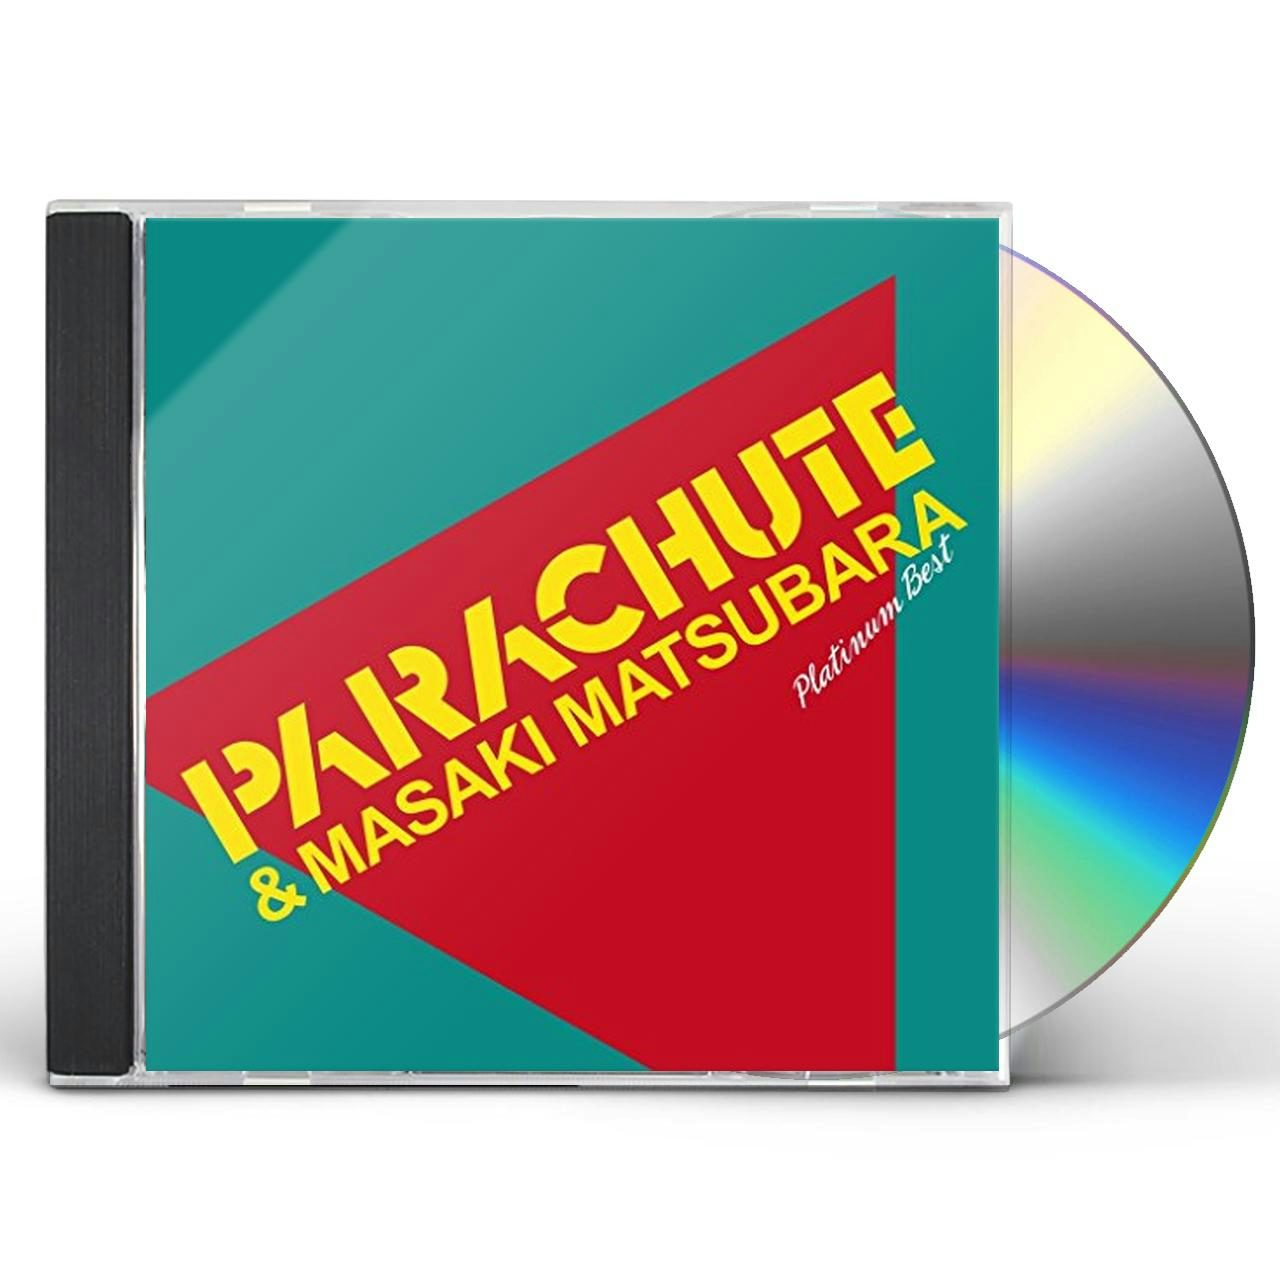 PLATINUM BEST PARACHUTE & MATSUBARA MA CD